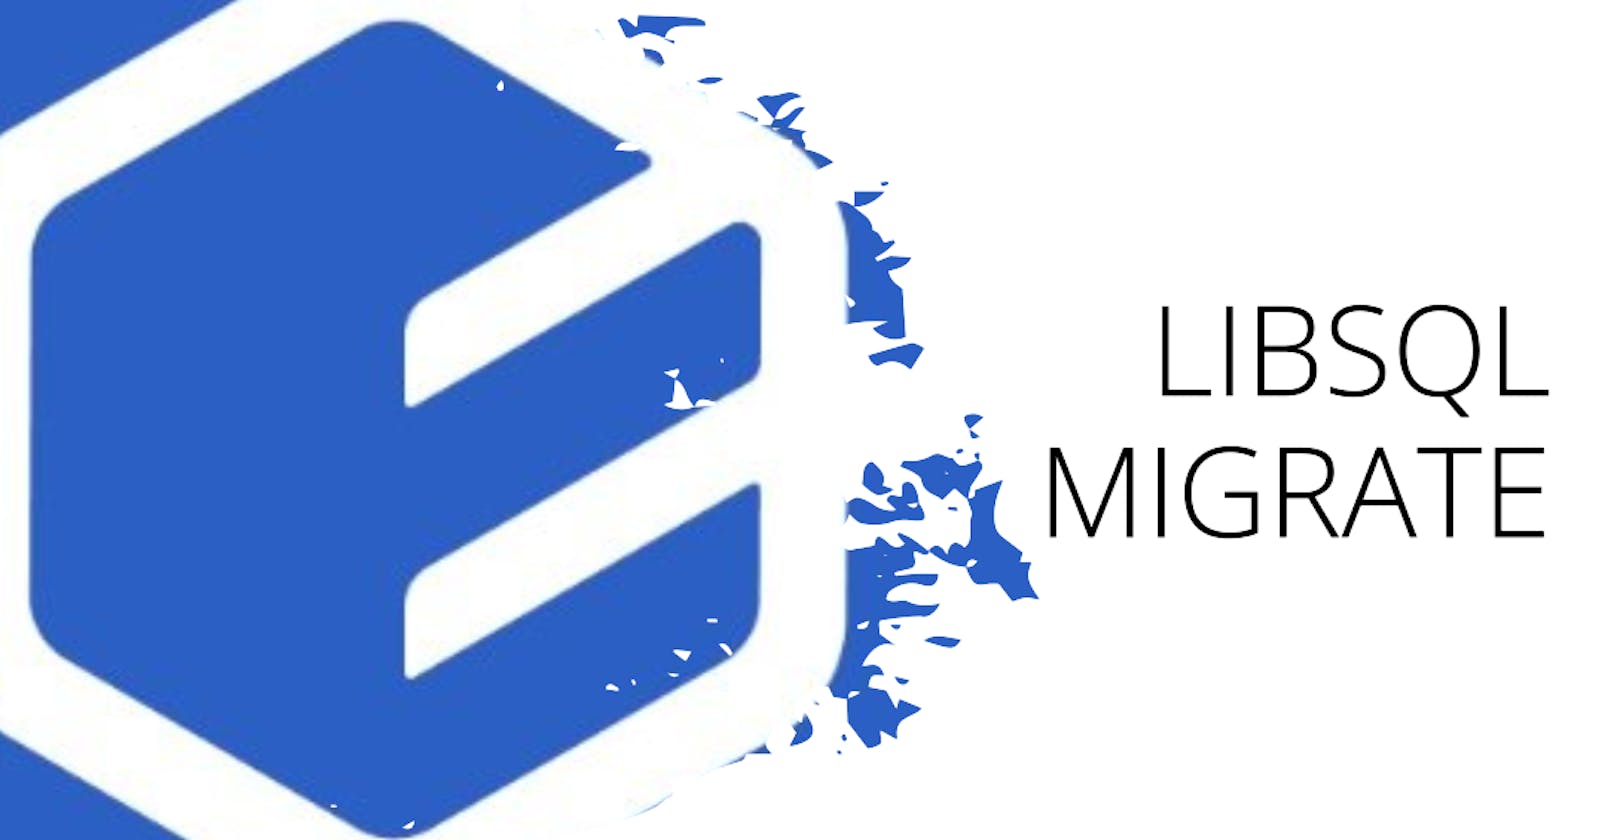 Introducing libsql Migrate